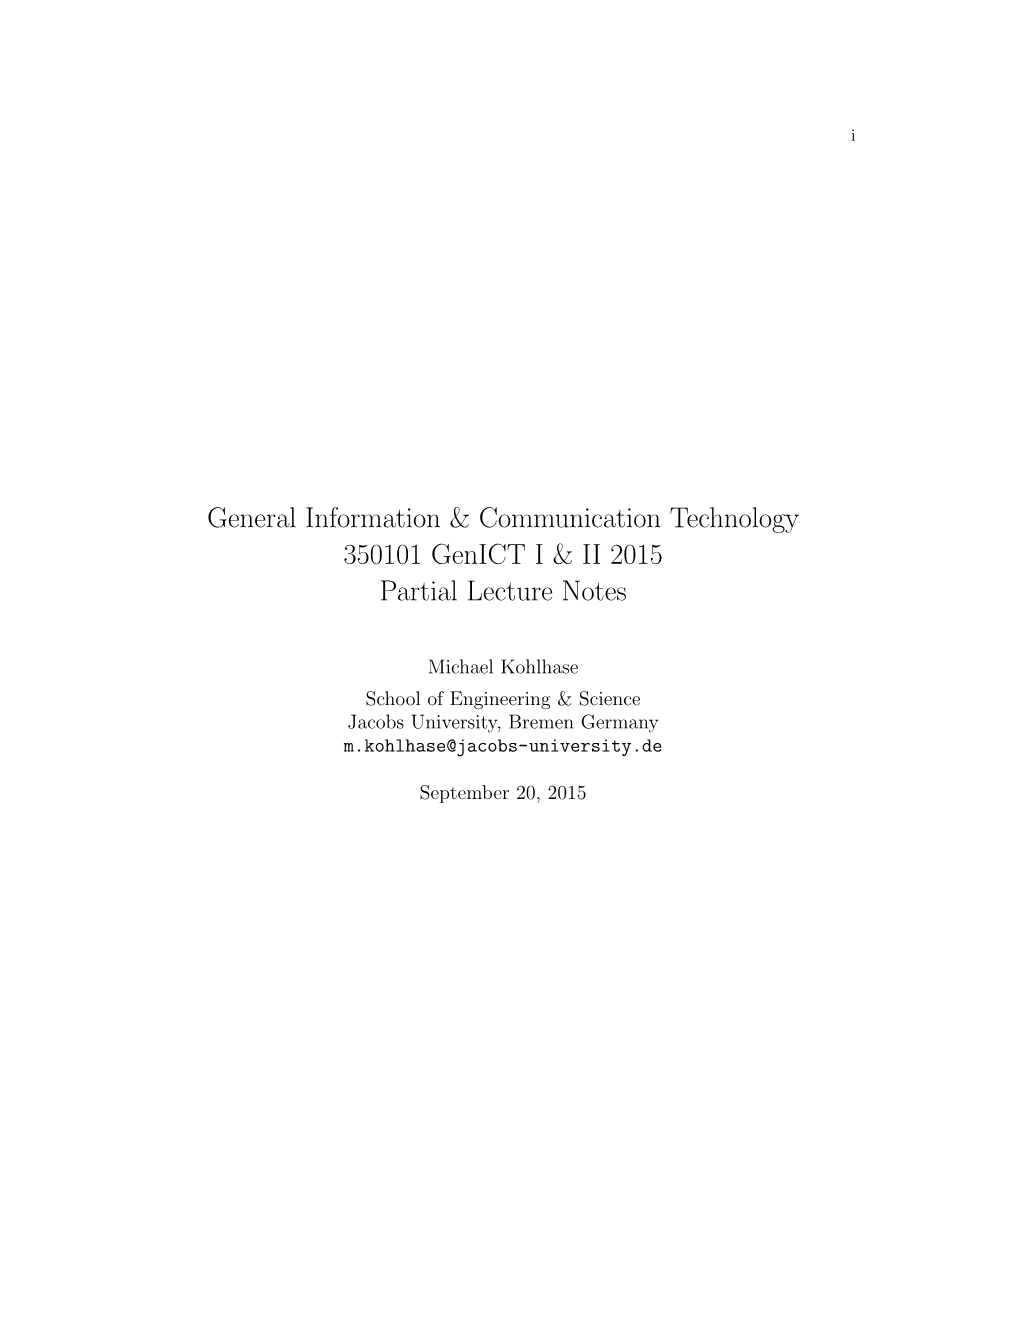 General Information & Communication Technology 350101 Genict I & II